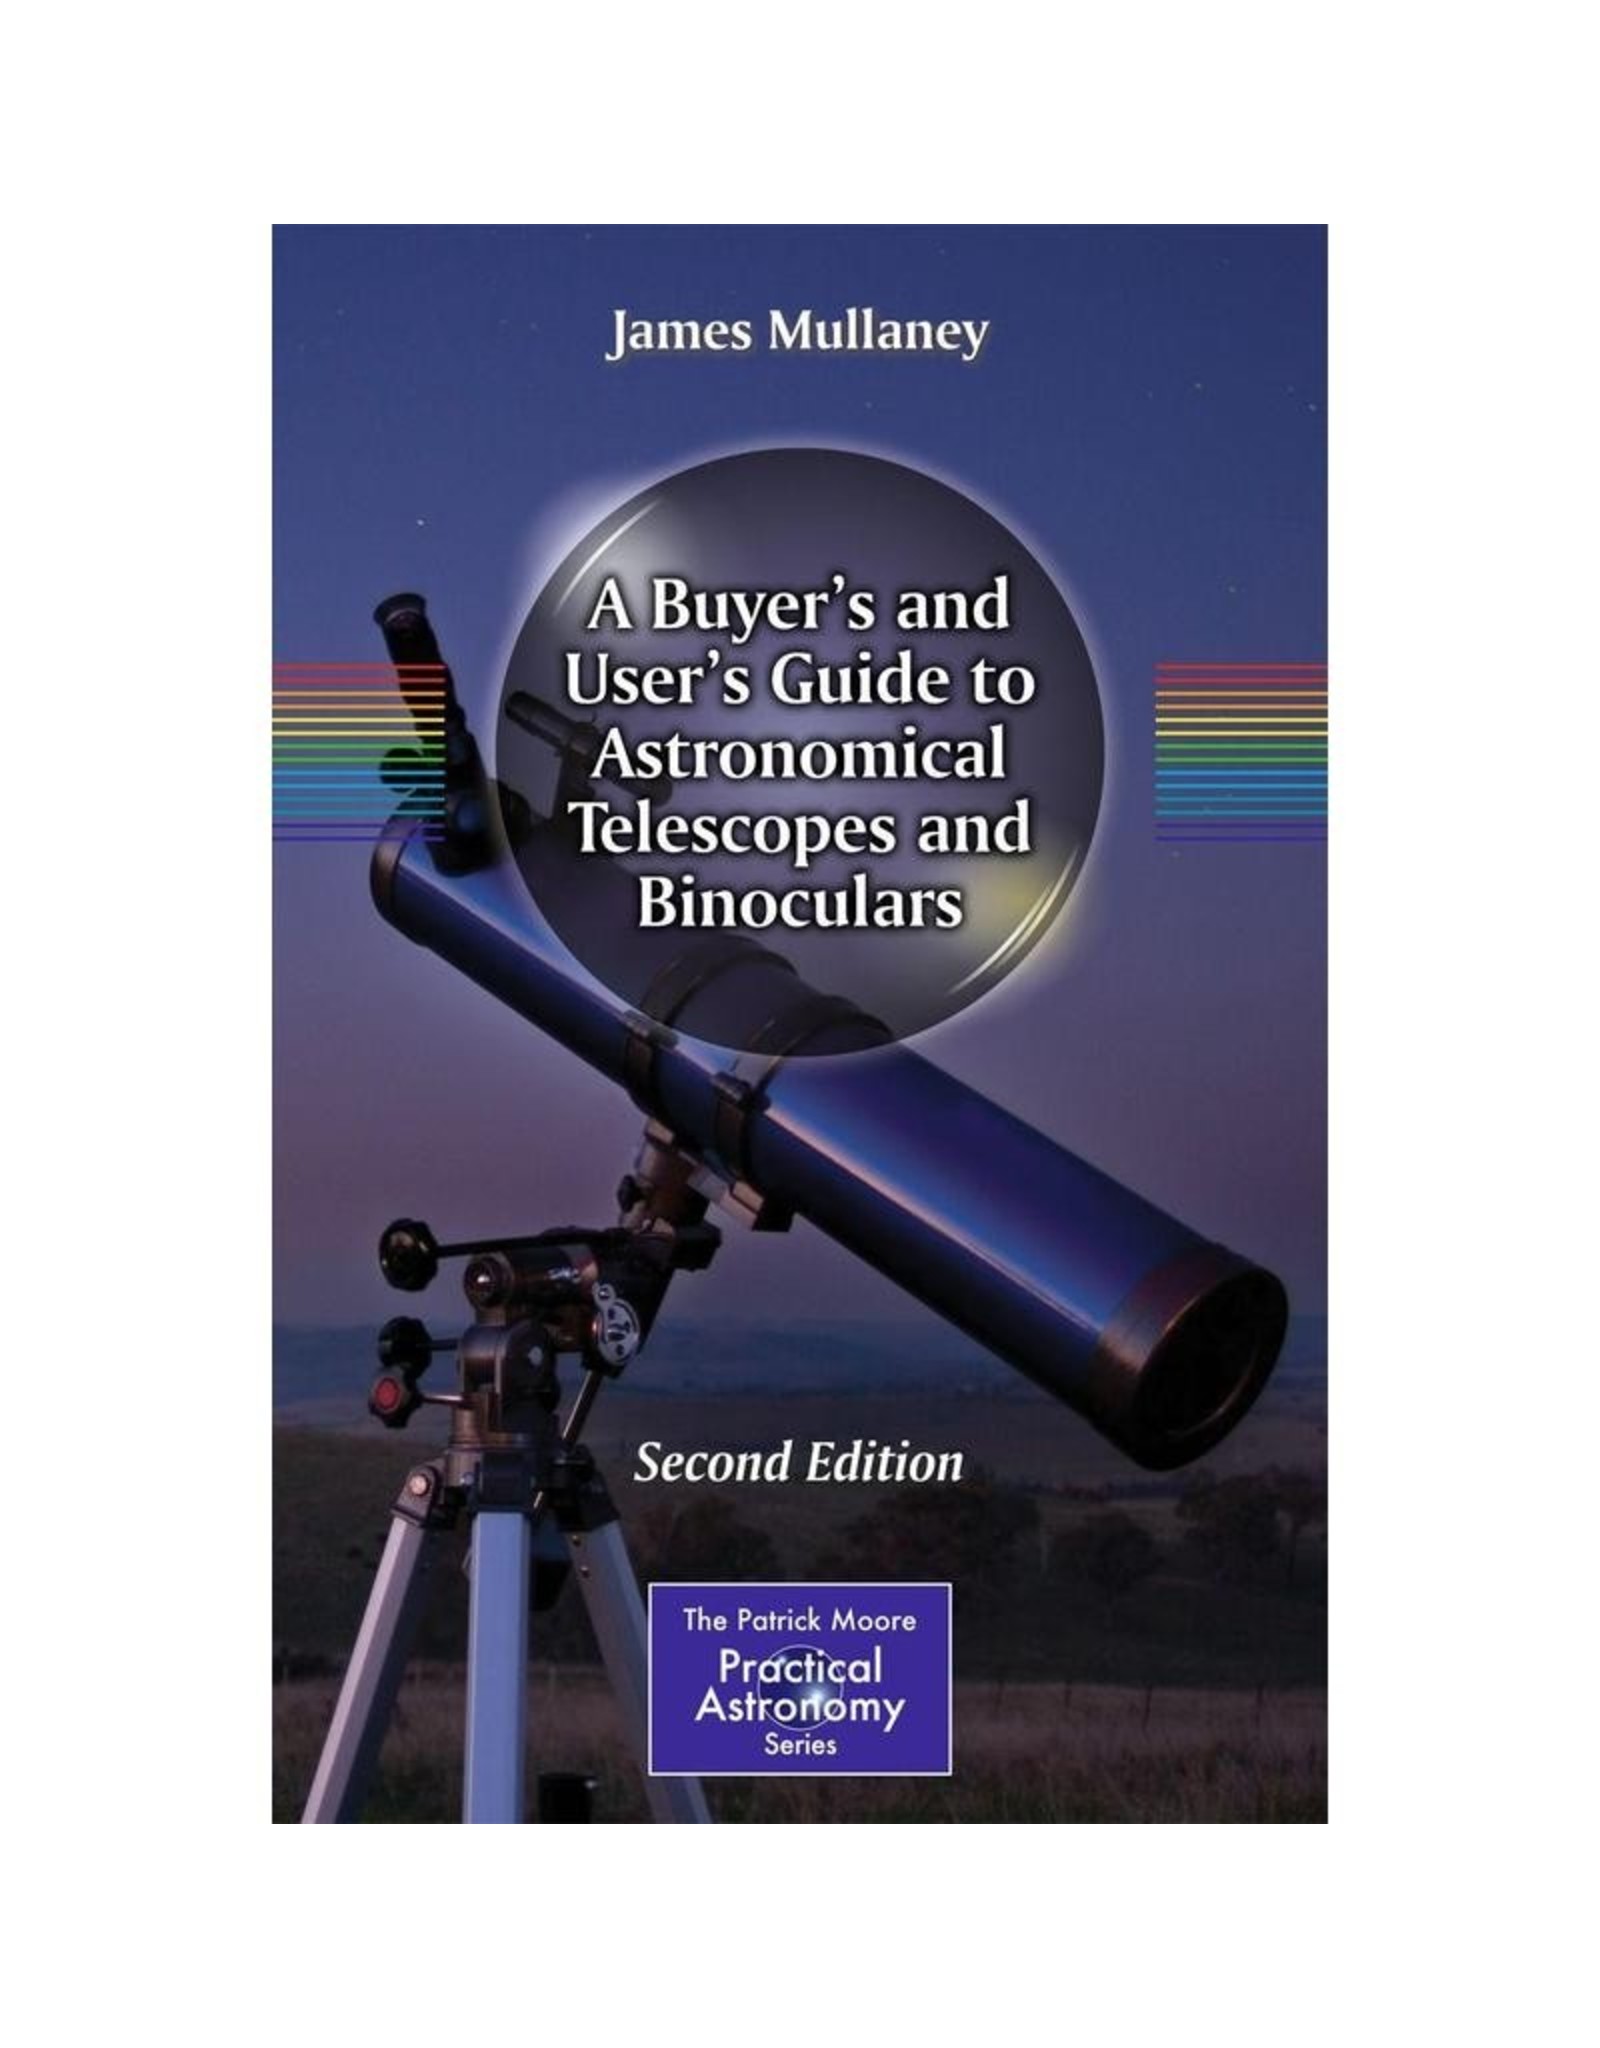 Springer Guide to telescopes and binoculars